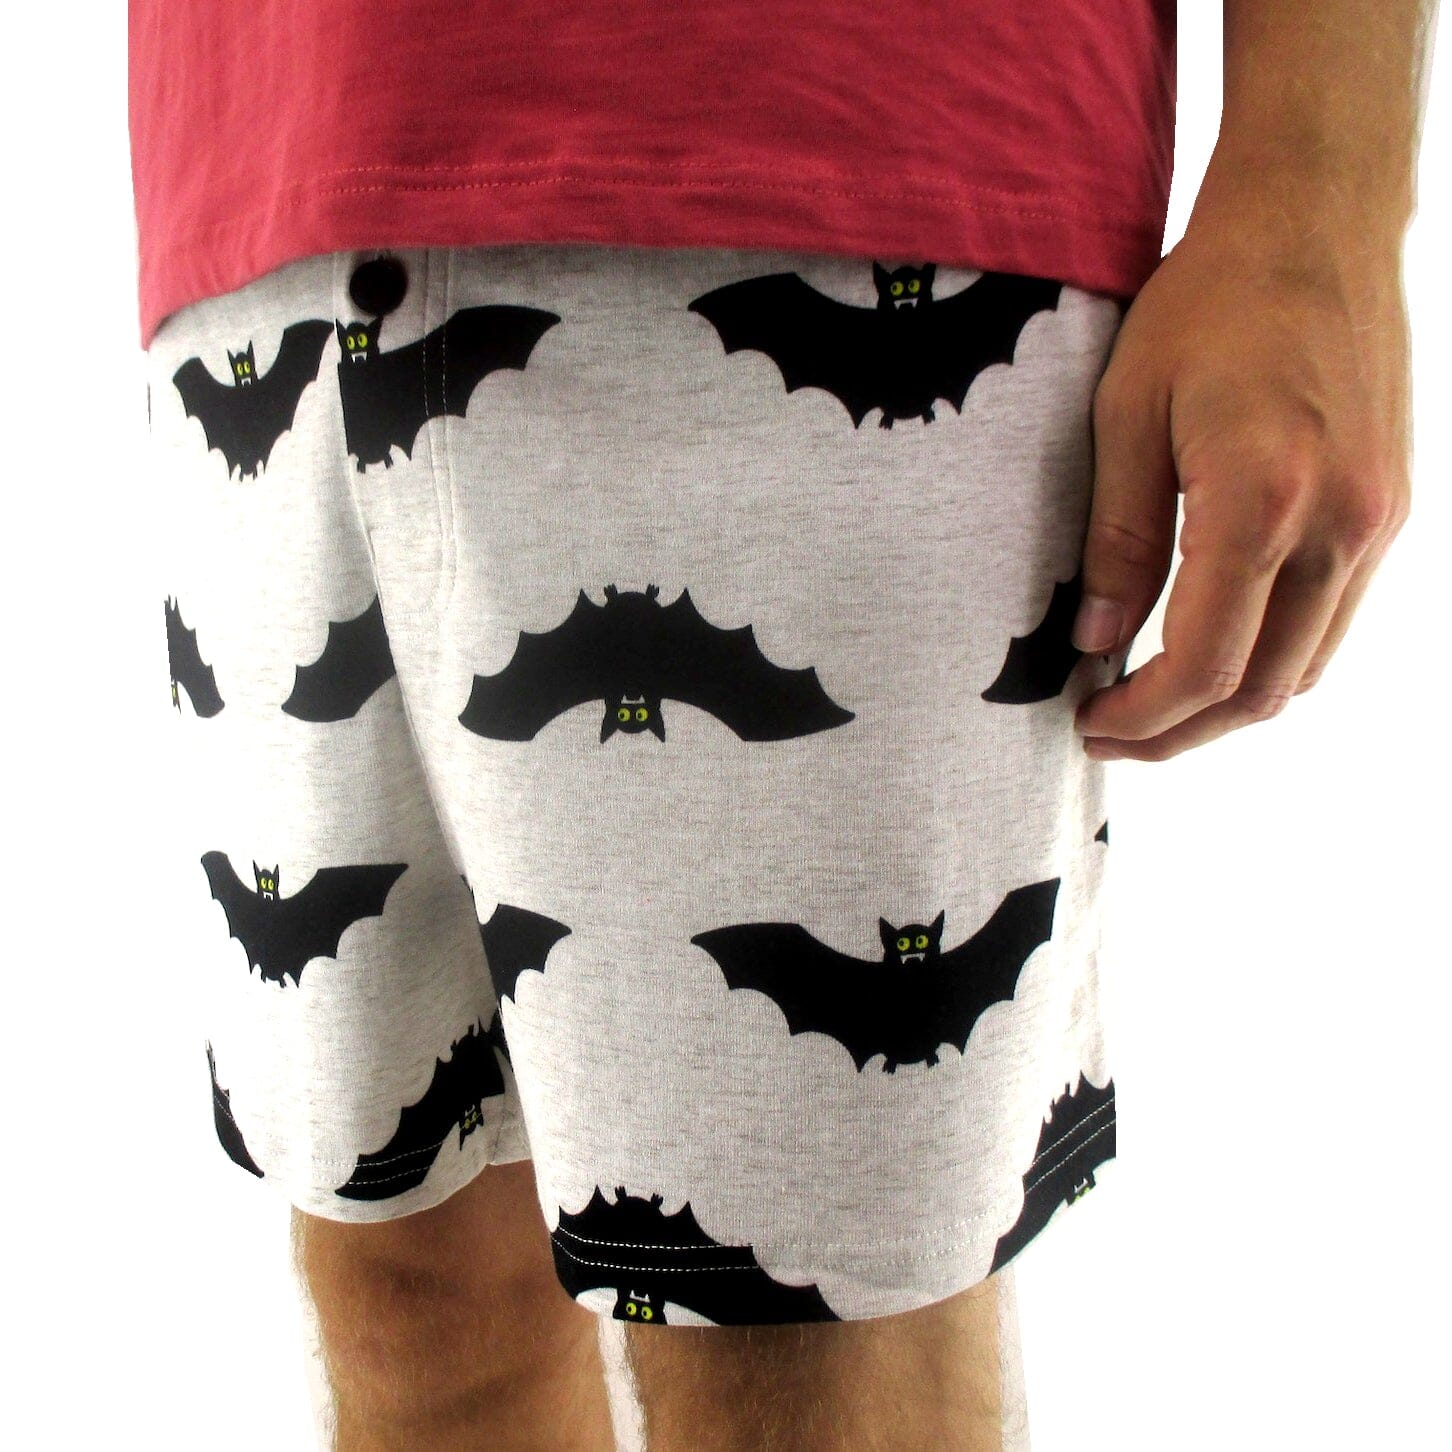 Men's Sleepwear. Super Comfy Bat Patterned Cotton Boxer Pajama Shorts